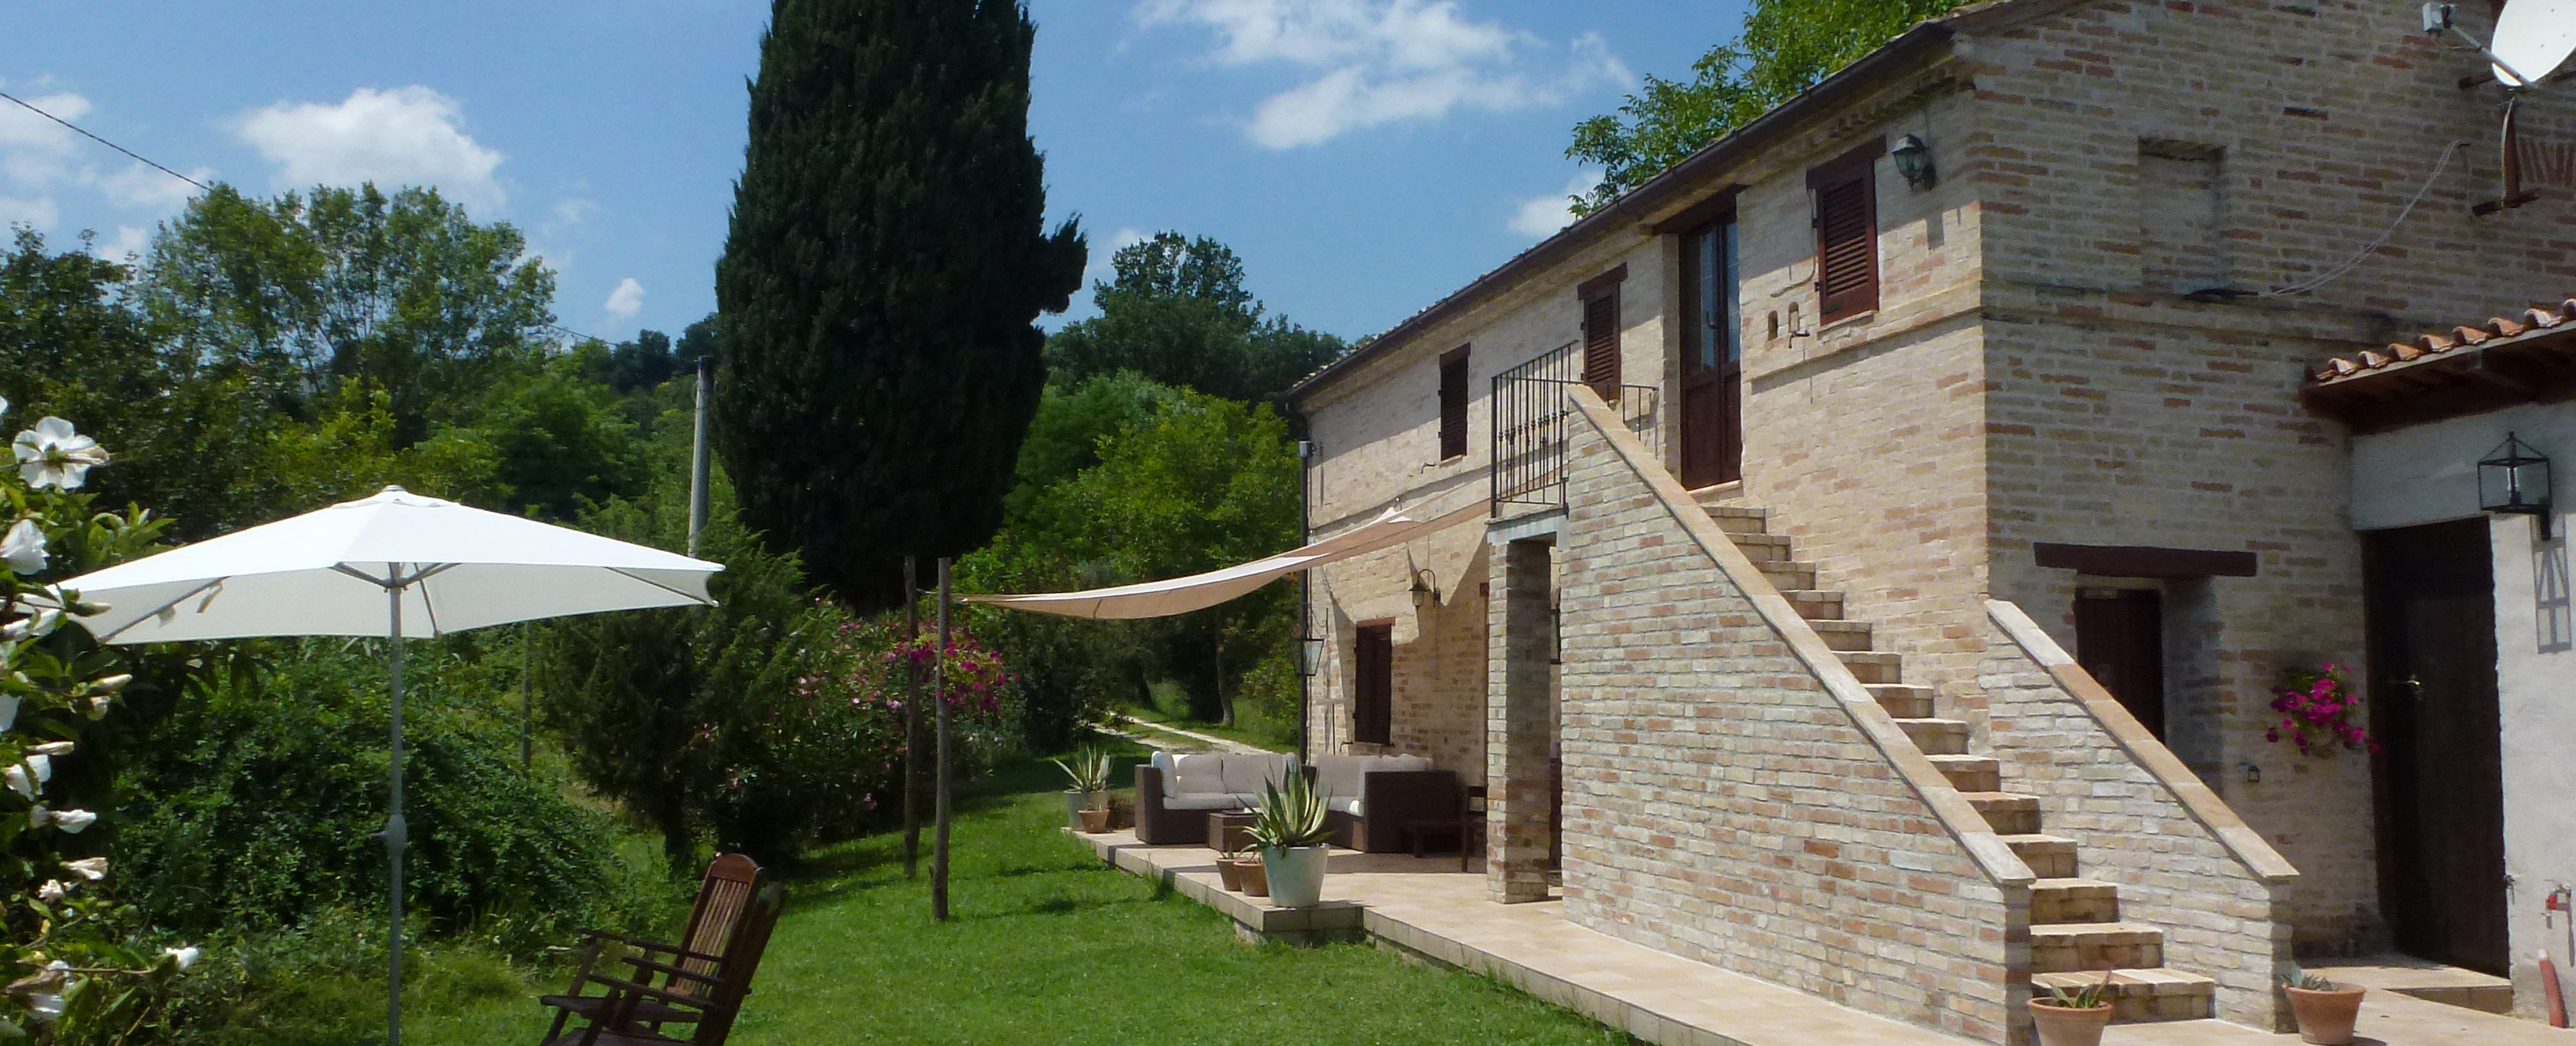 Vakantiewoning Casa Cipresse in Le Marche - Italië